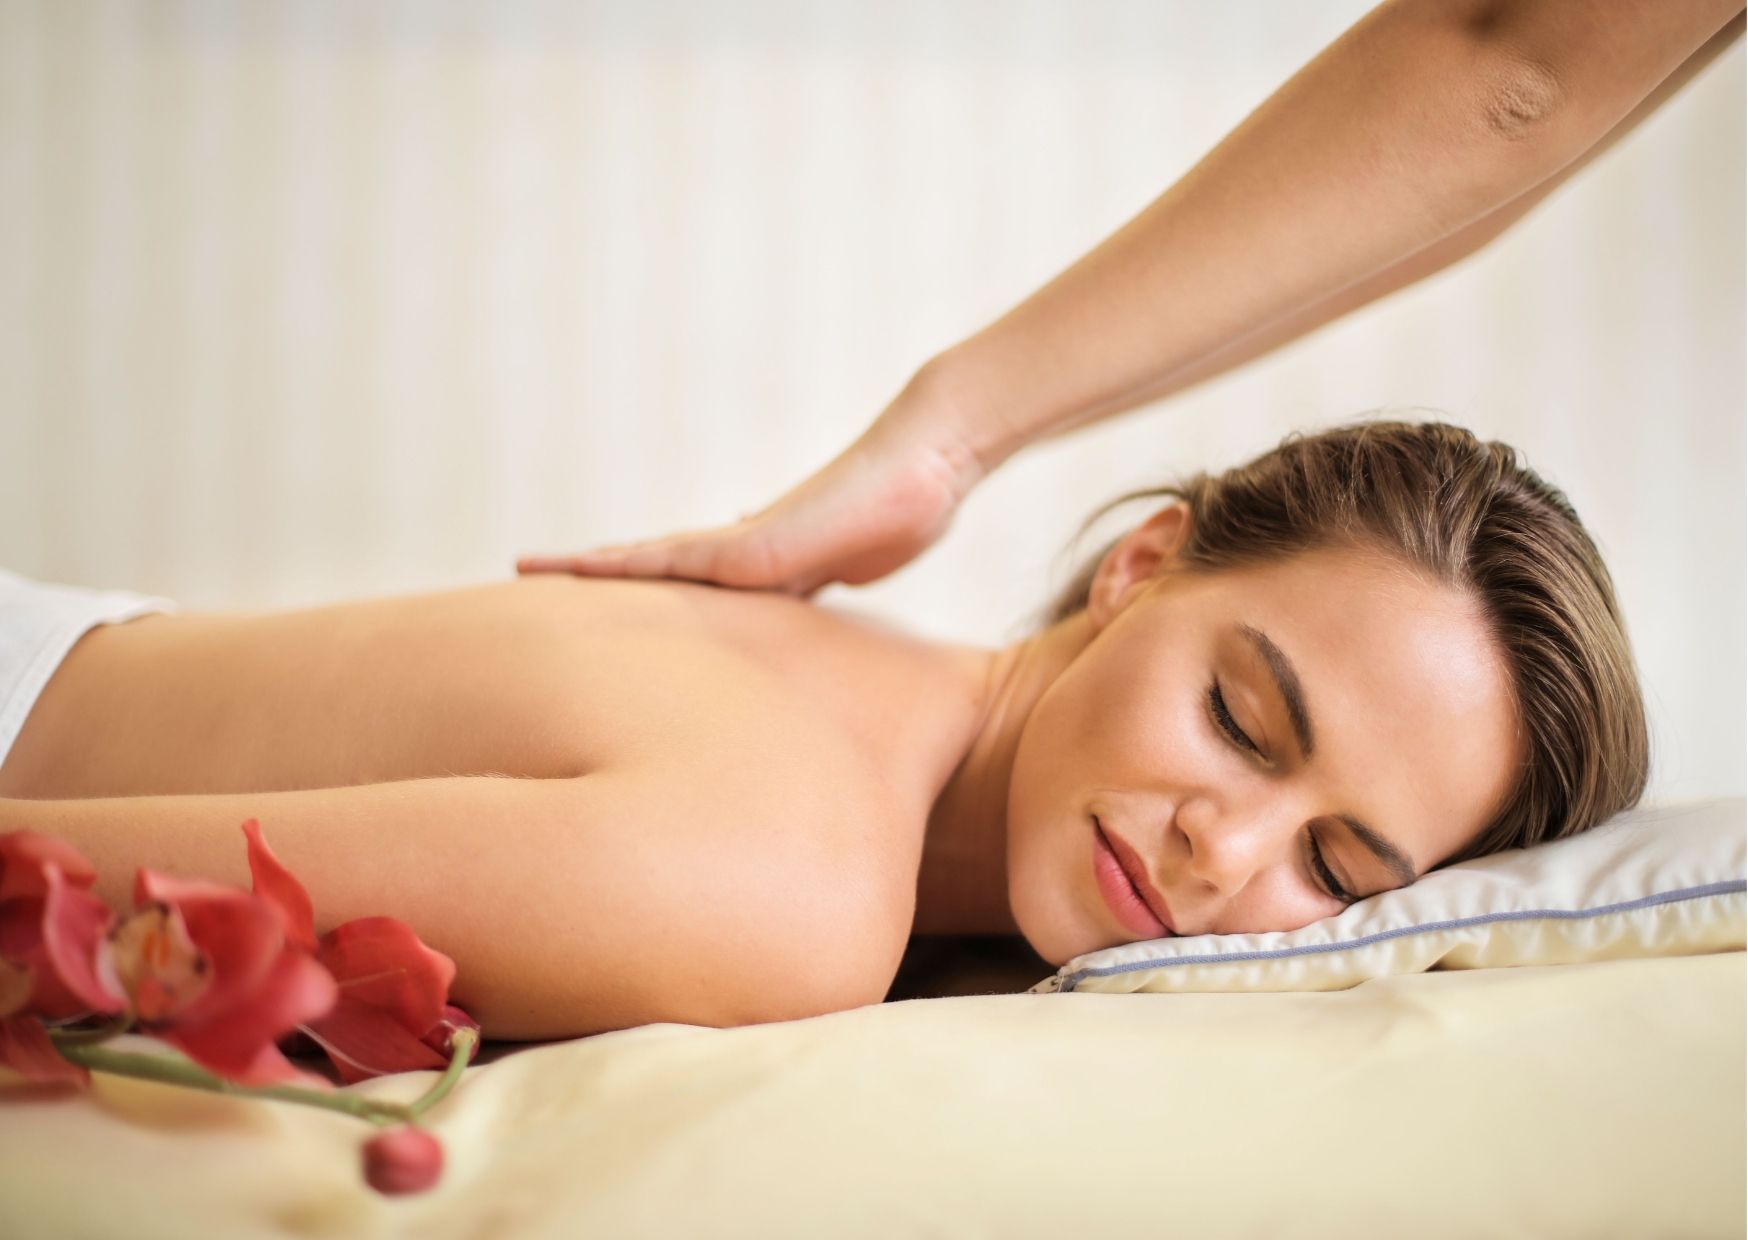 A beautiful girl receiving back massage